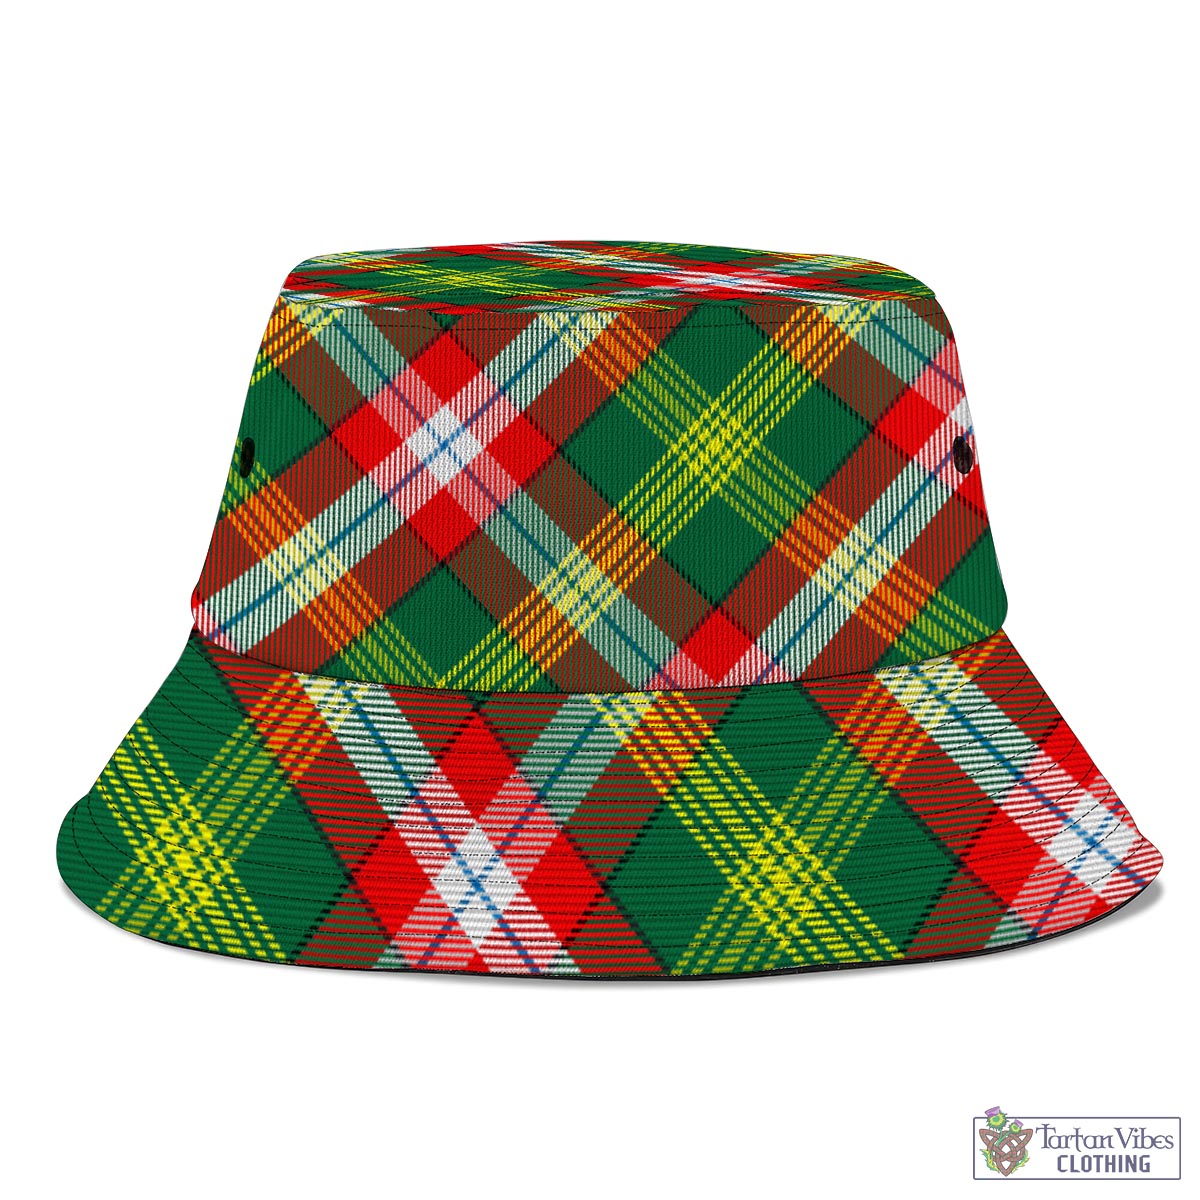 Tartan Vibes Clothing Northwest Territories Canada Tartan Bucket Hat